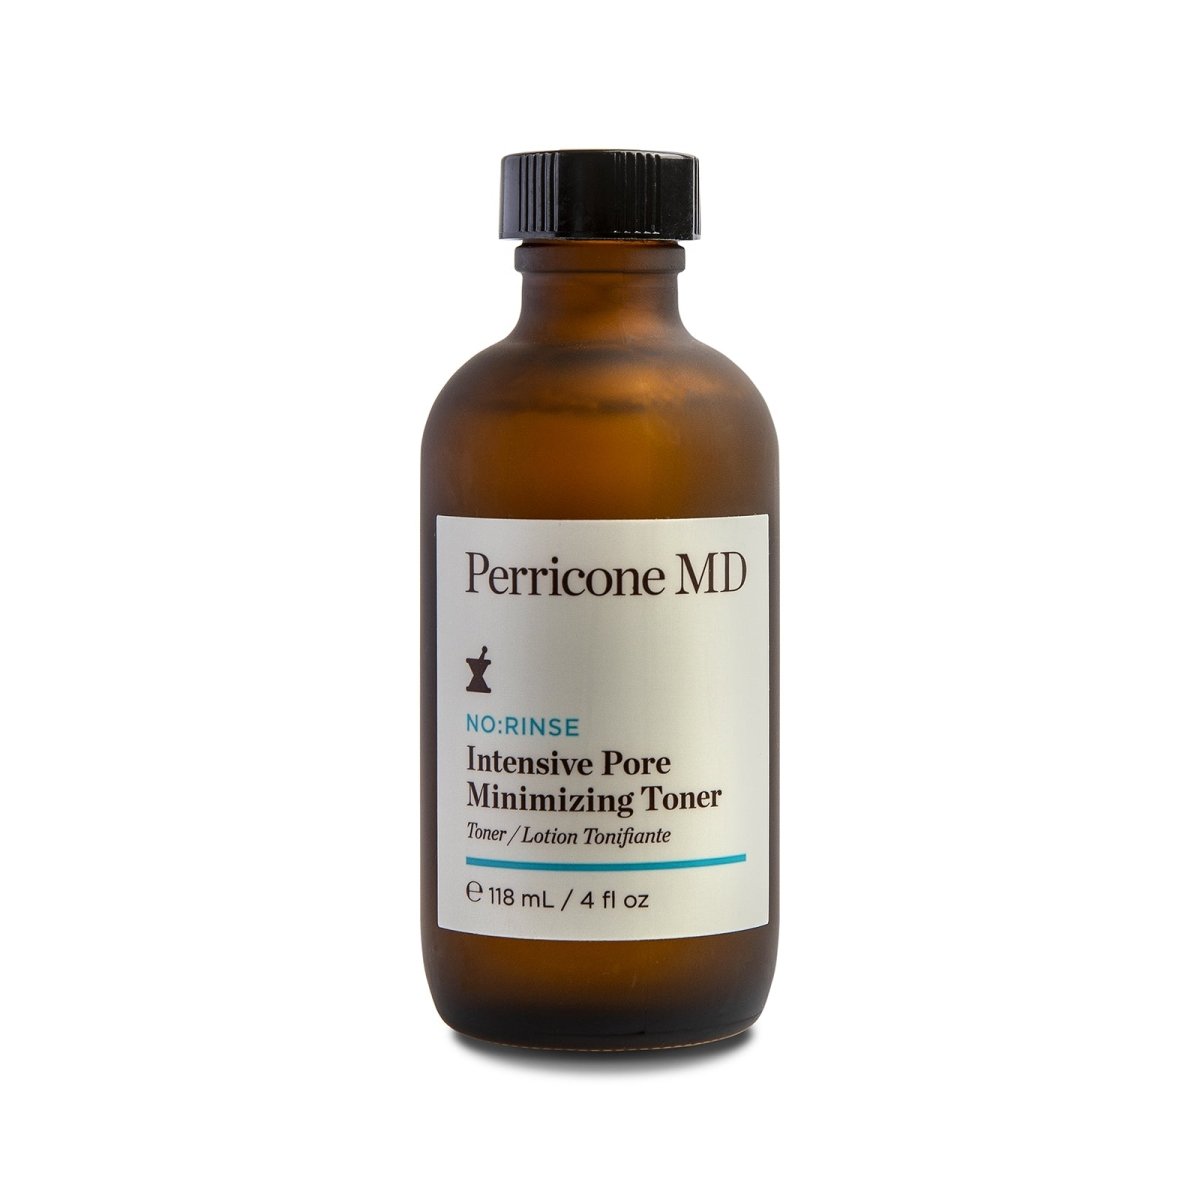 Image of Perricone MD No:Rinse Intensive Pore Minimizing Toner